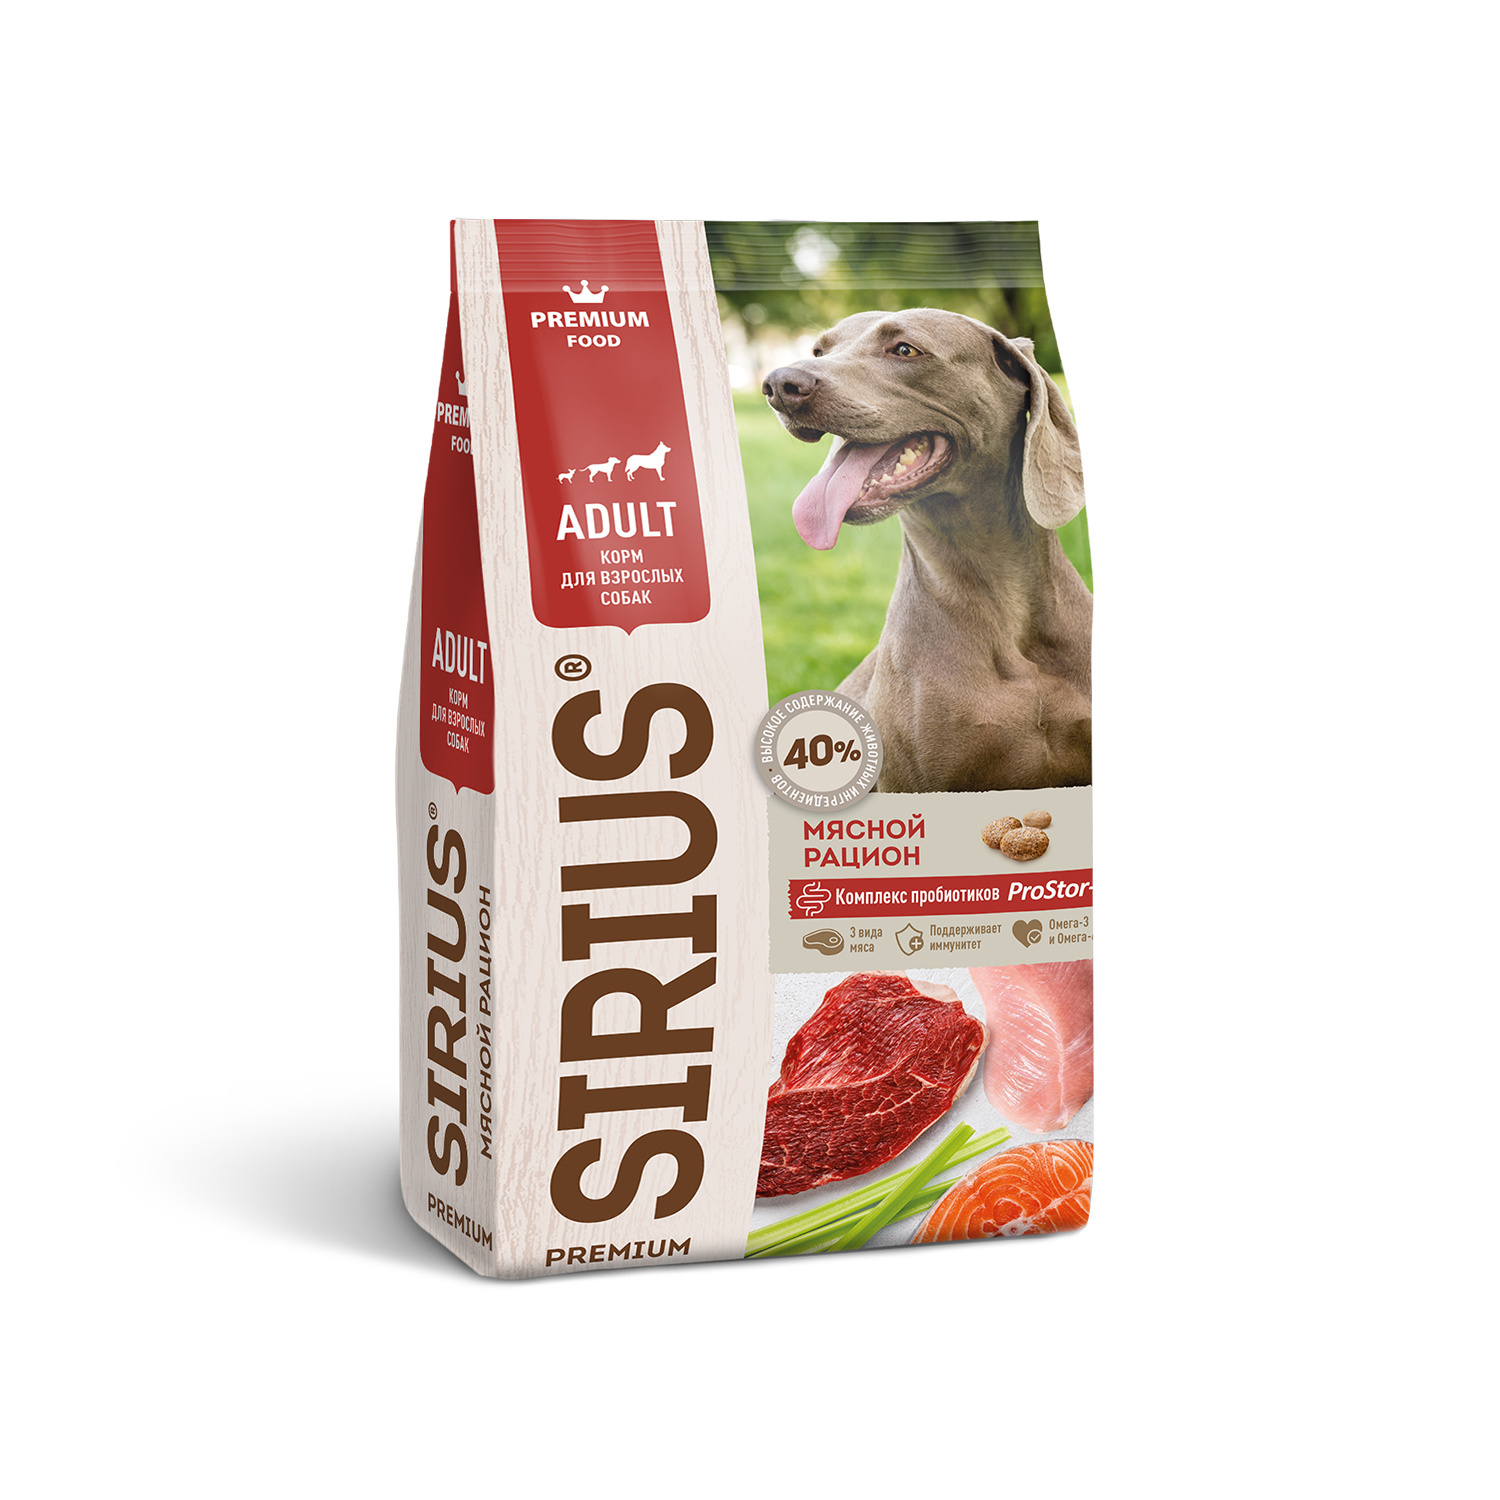 Sirius Sirius сухой корм для собак, мясной рацион (2 кг)